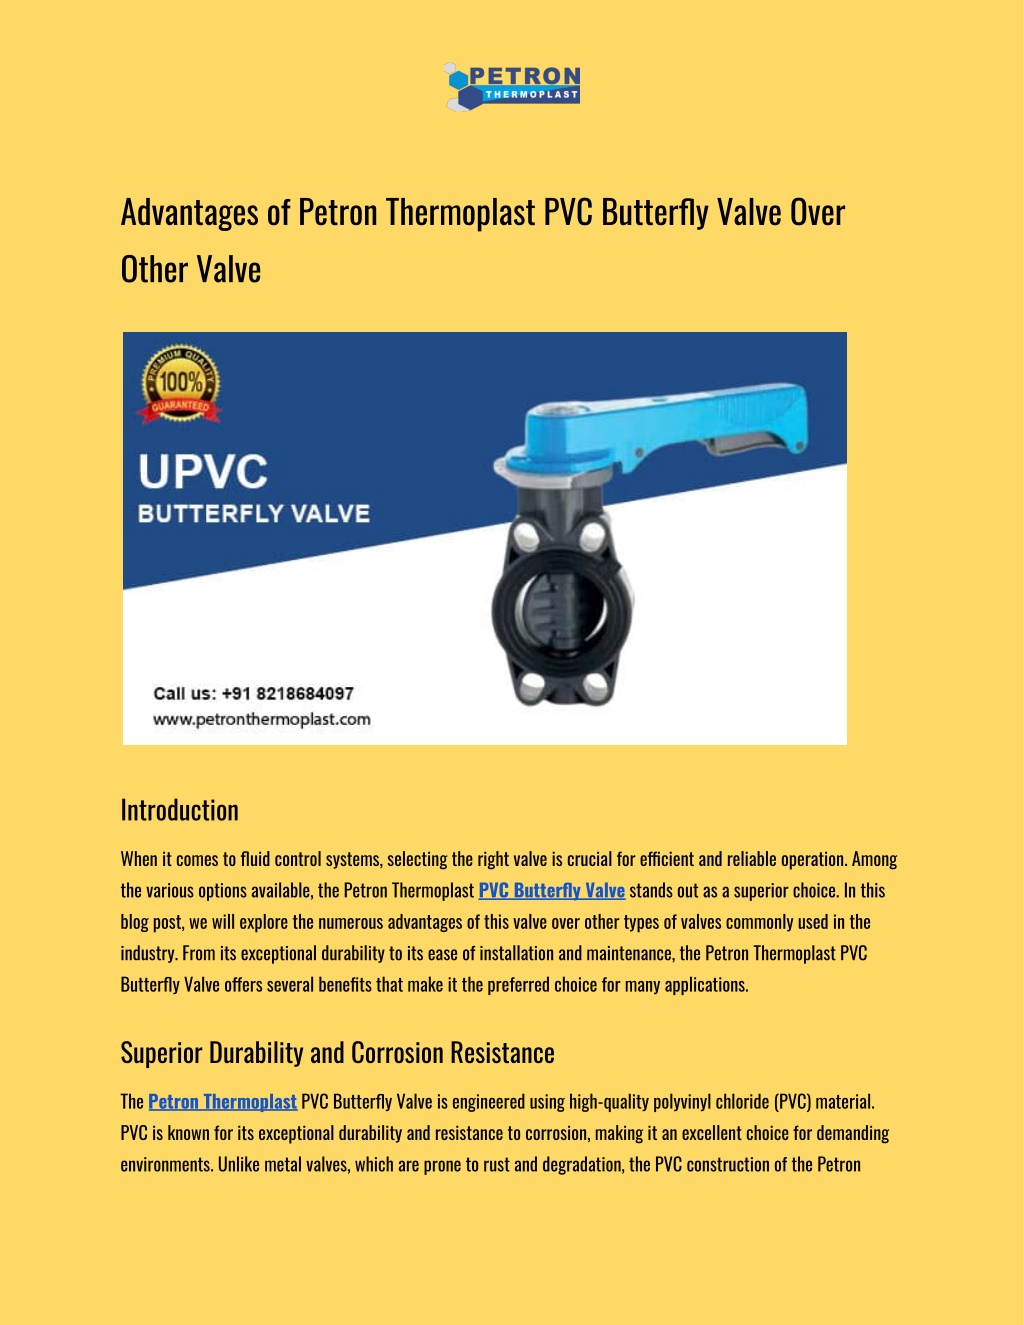 Plastic Sheet - Petron Thermoplast